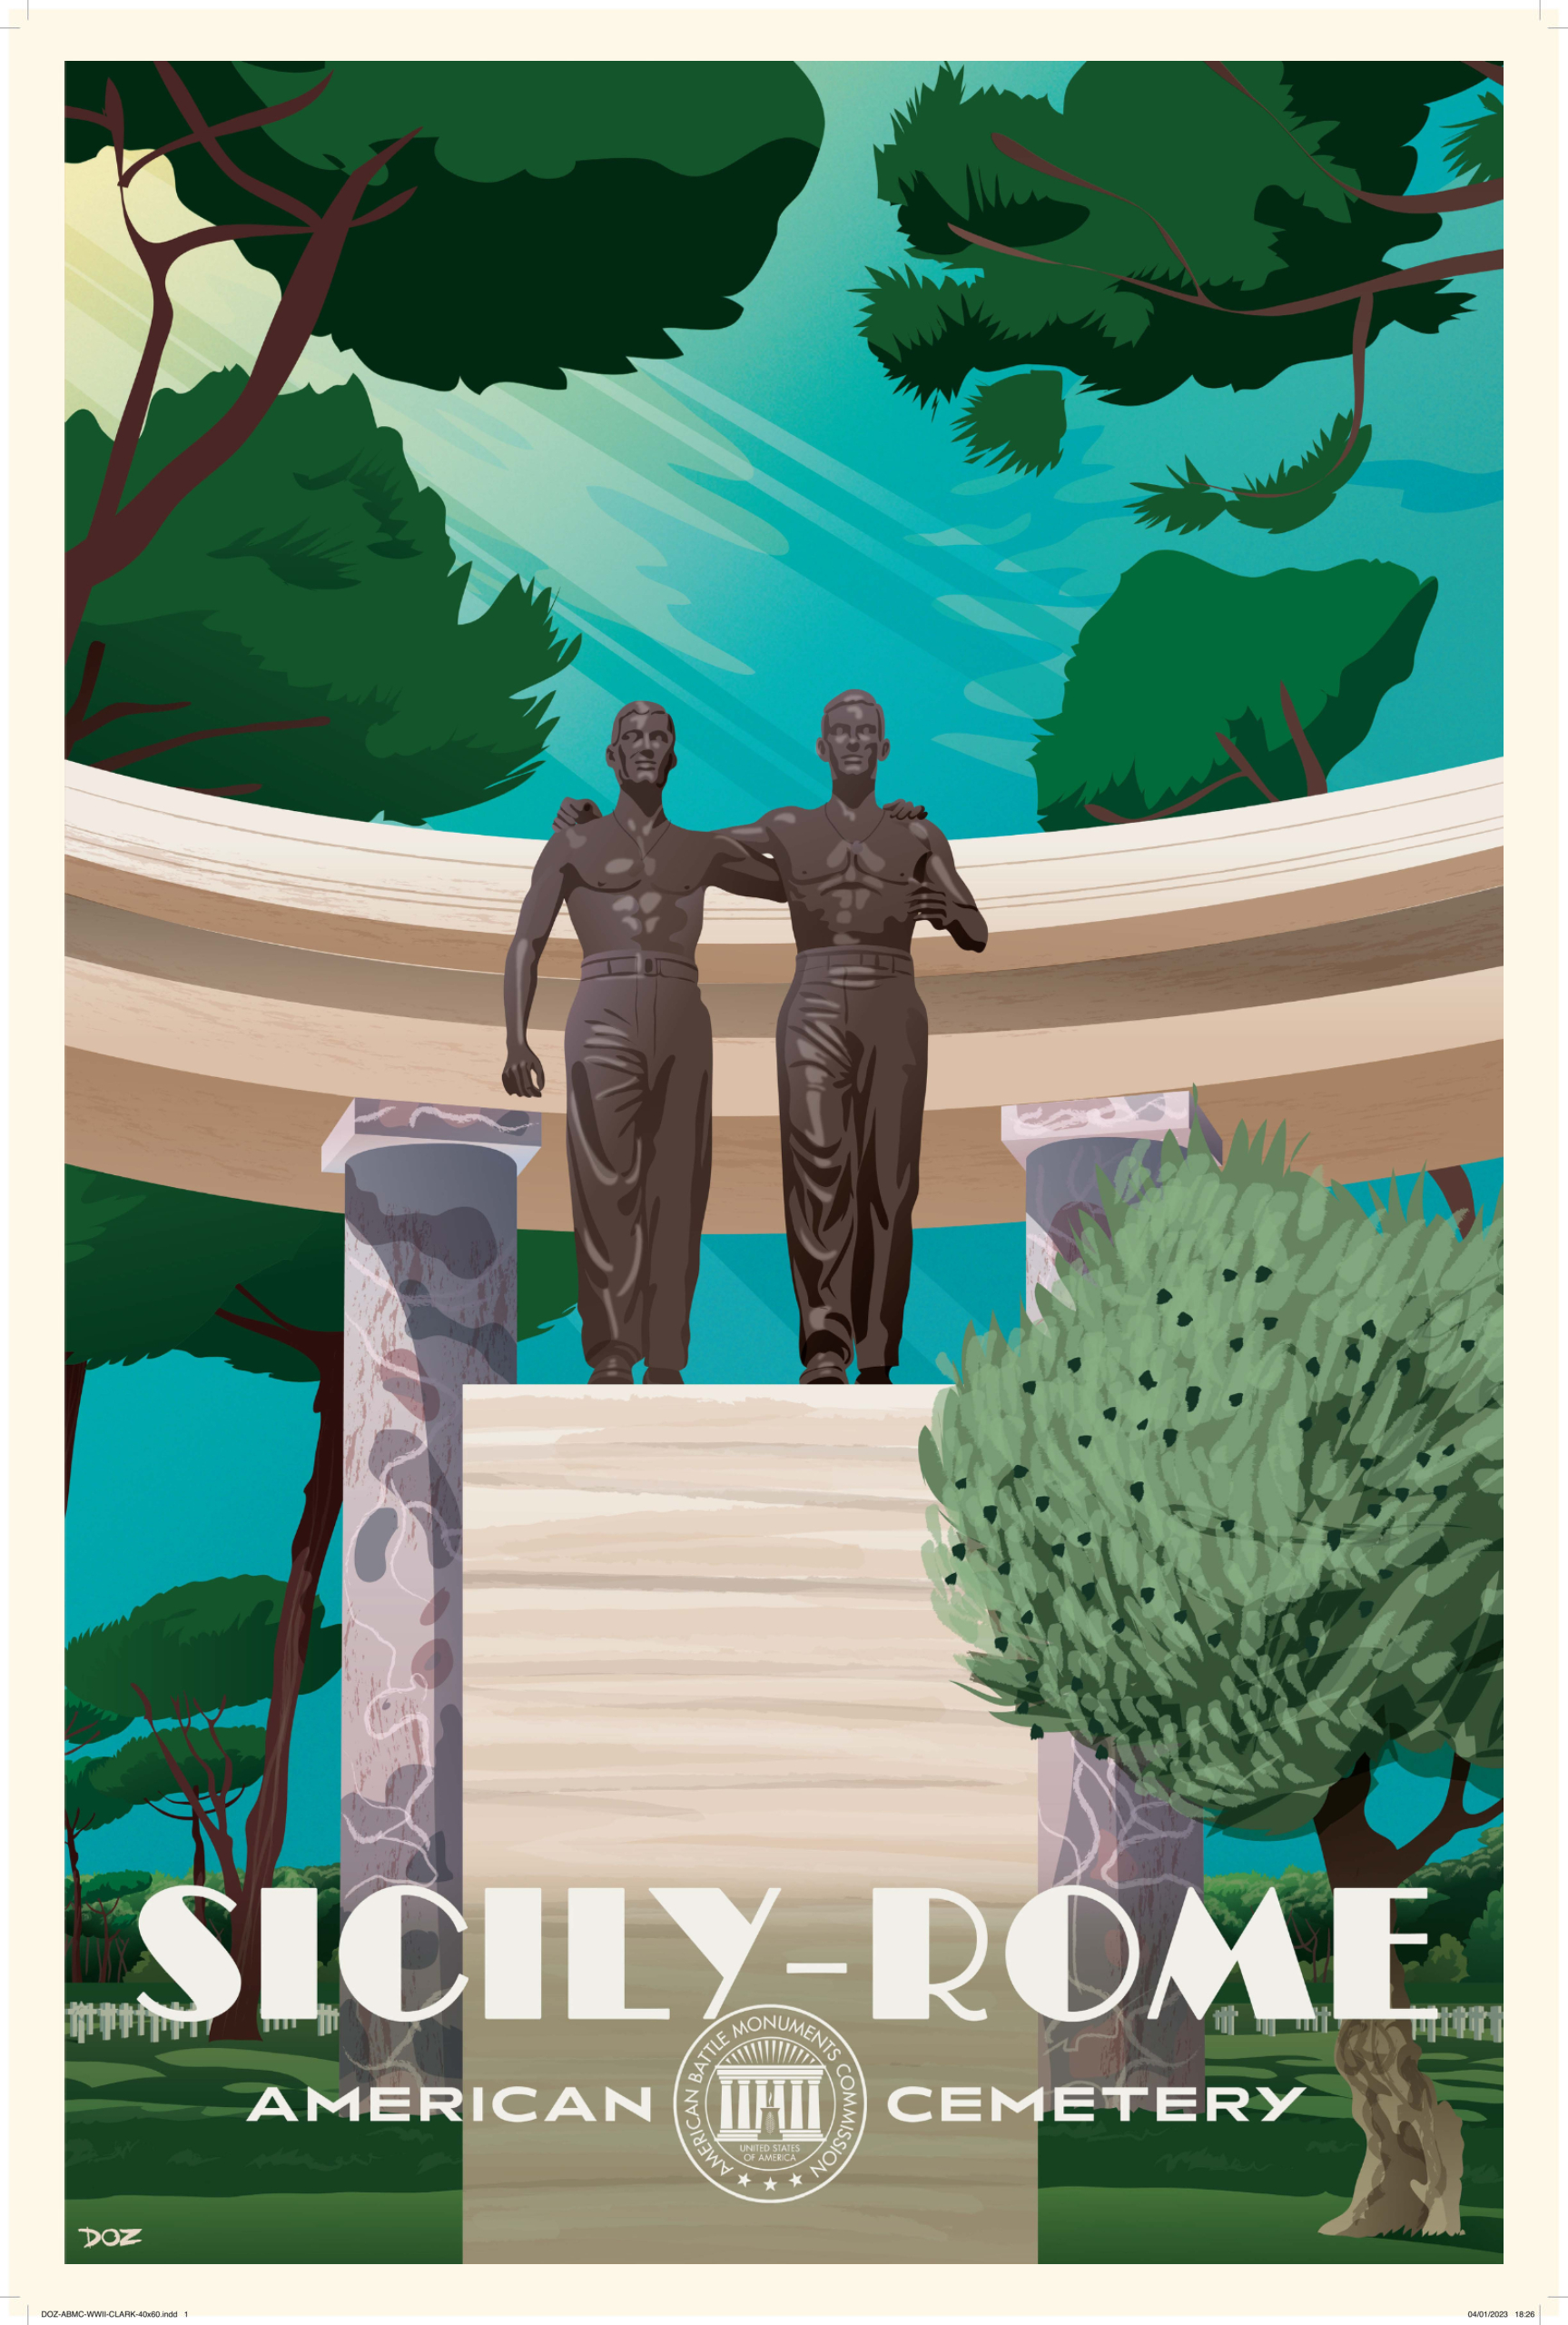 Sicily-Rome